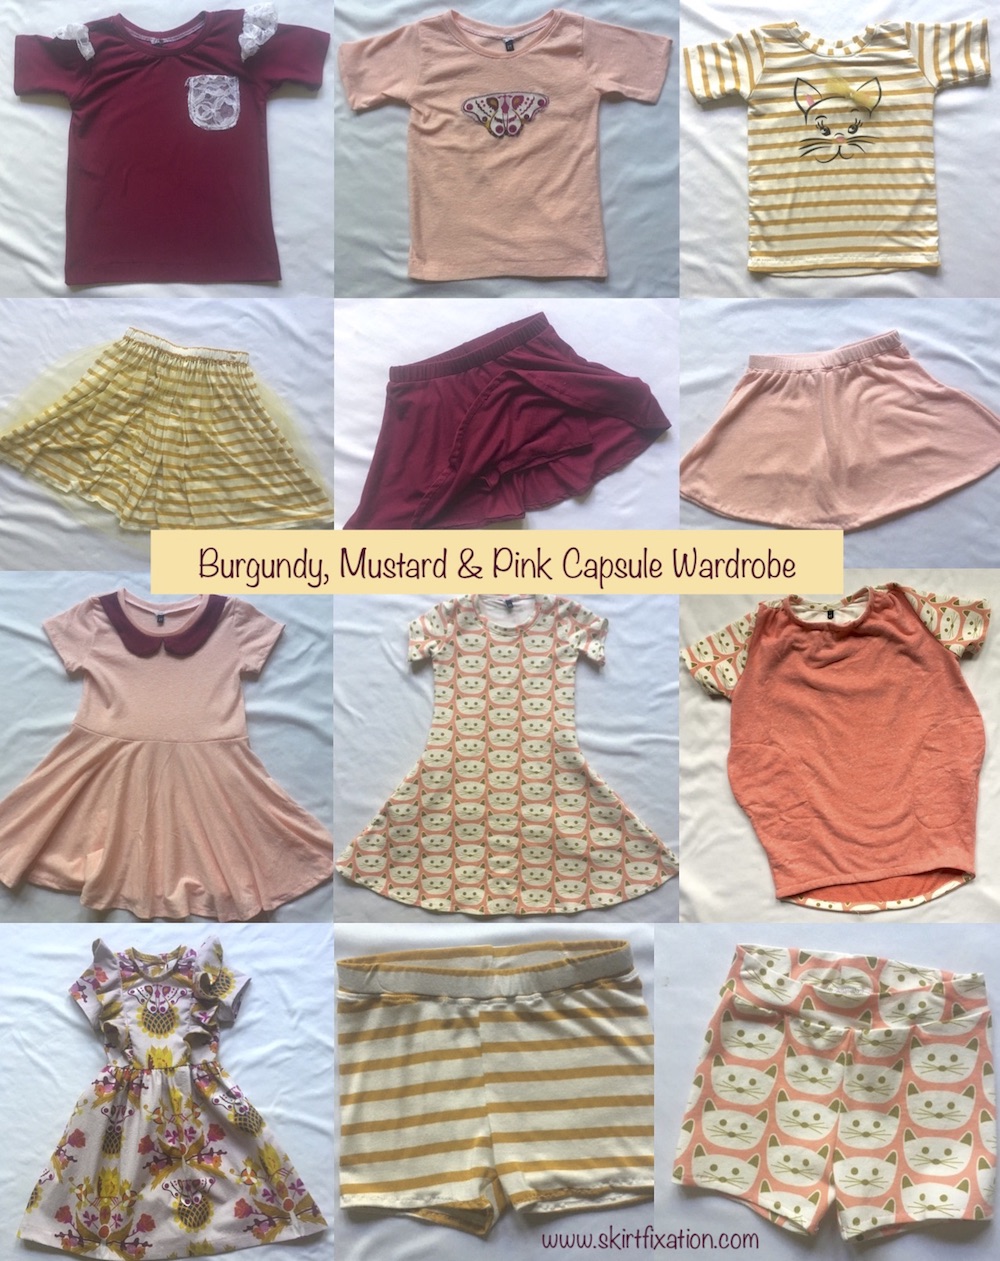 Burgundy, Mustard & Pink Toddler Capsule Wardrobe created by Skirt Fixation